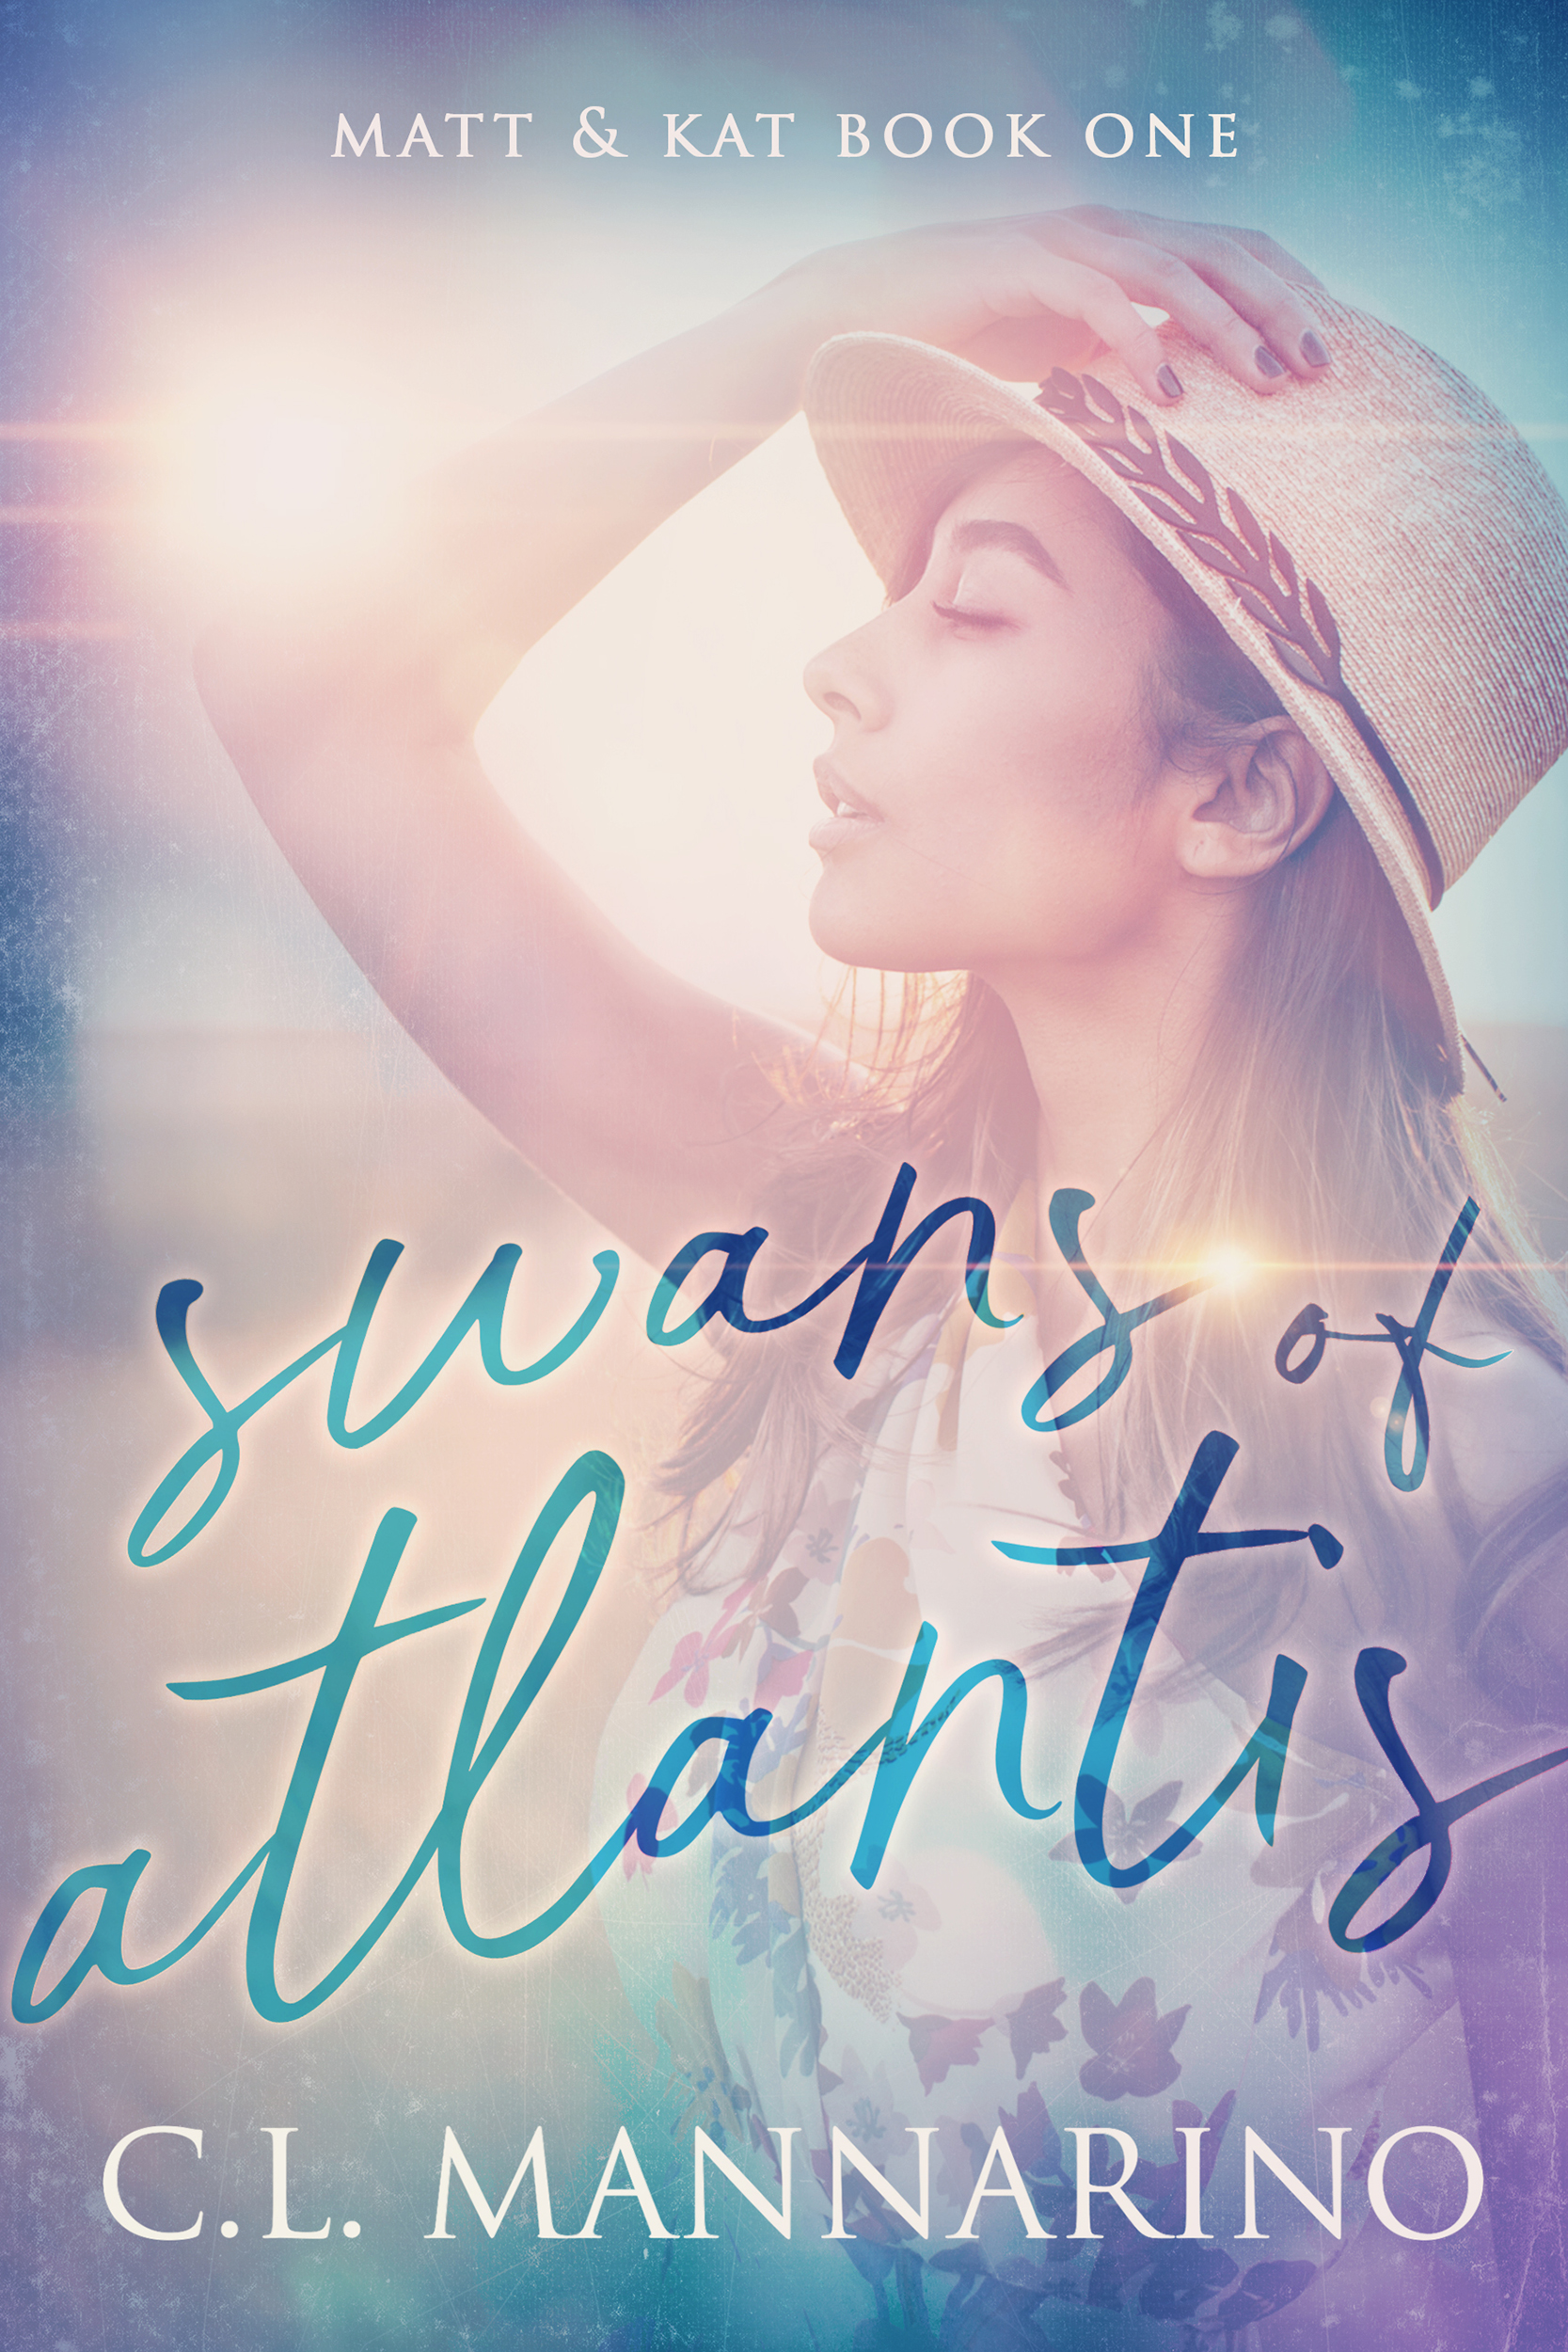 FREE: Swans of Atlantis by CL Mannarino